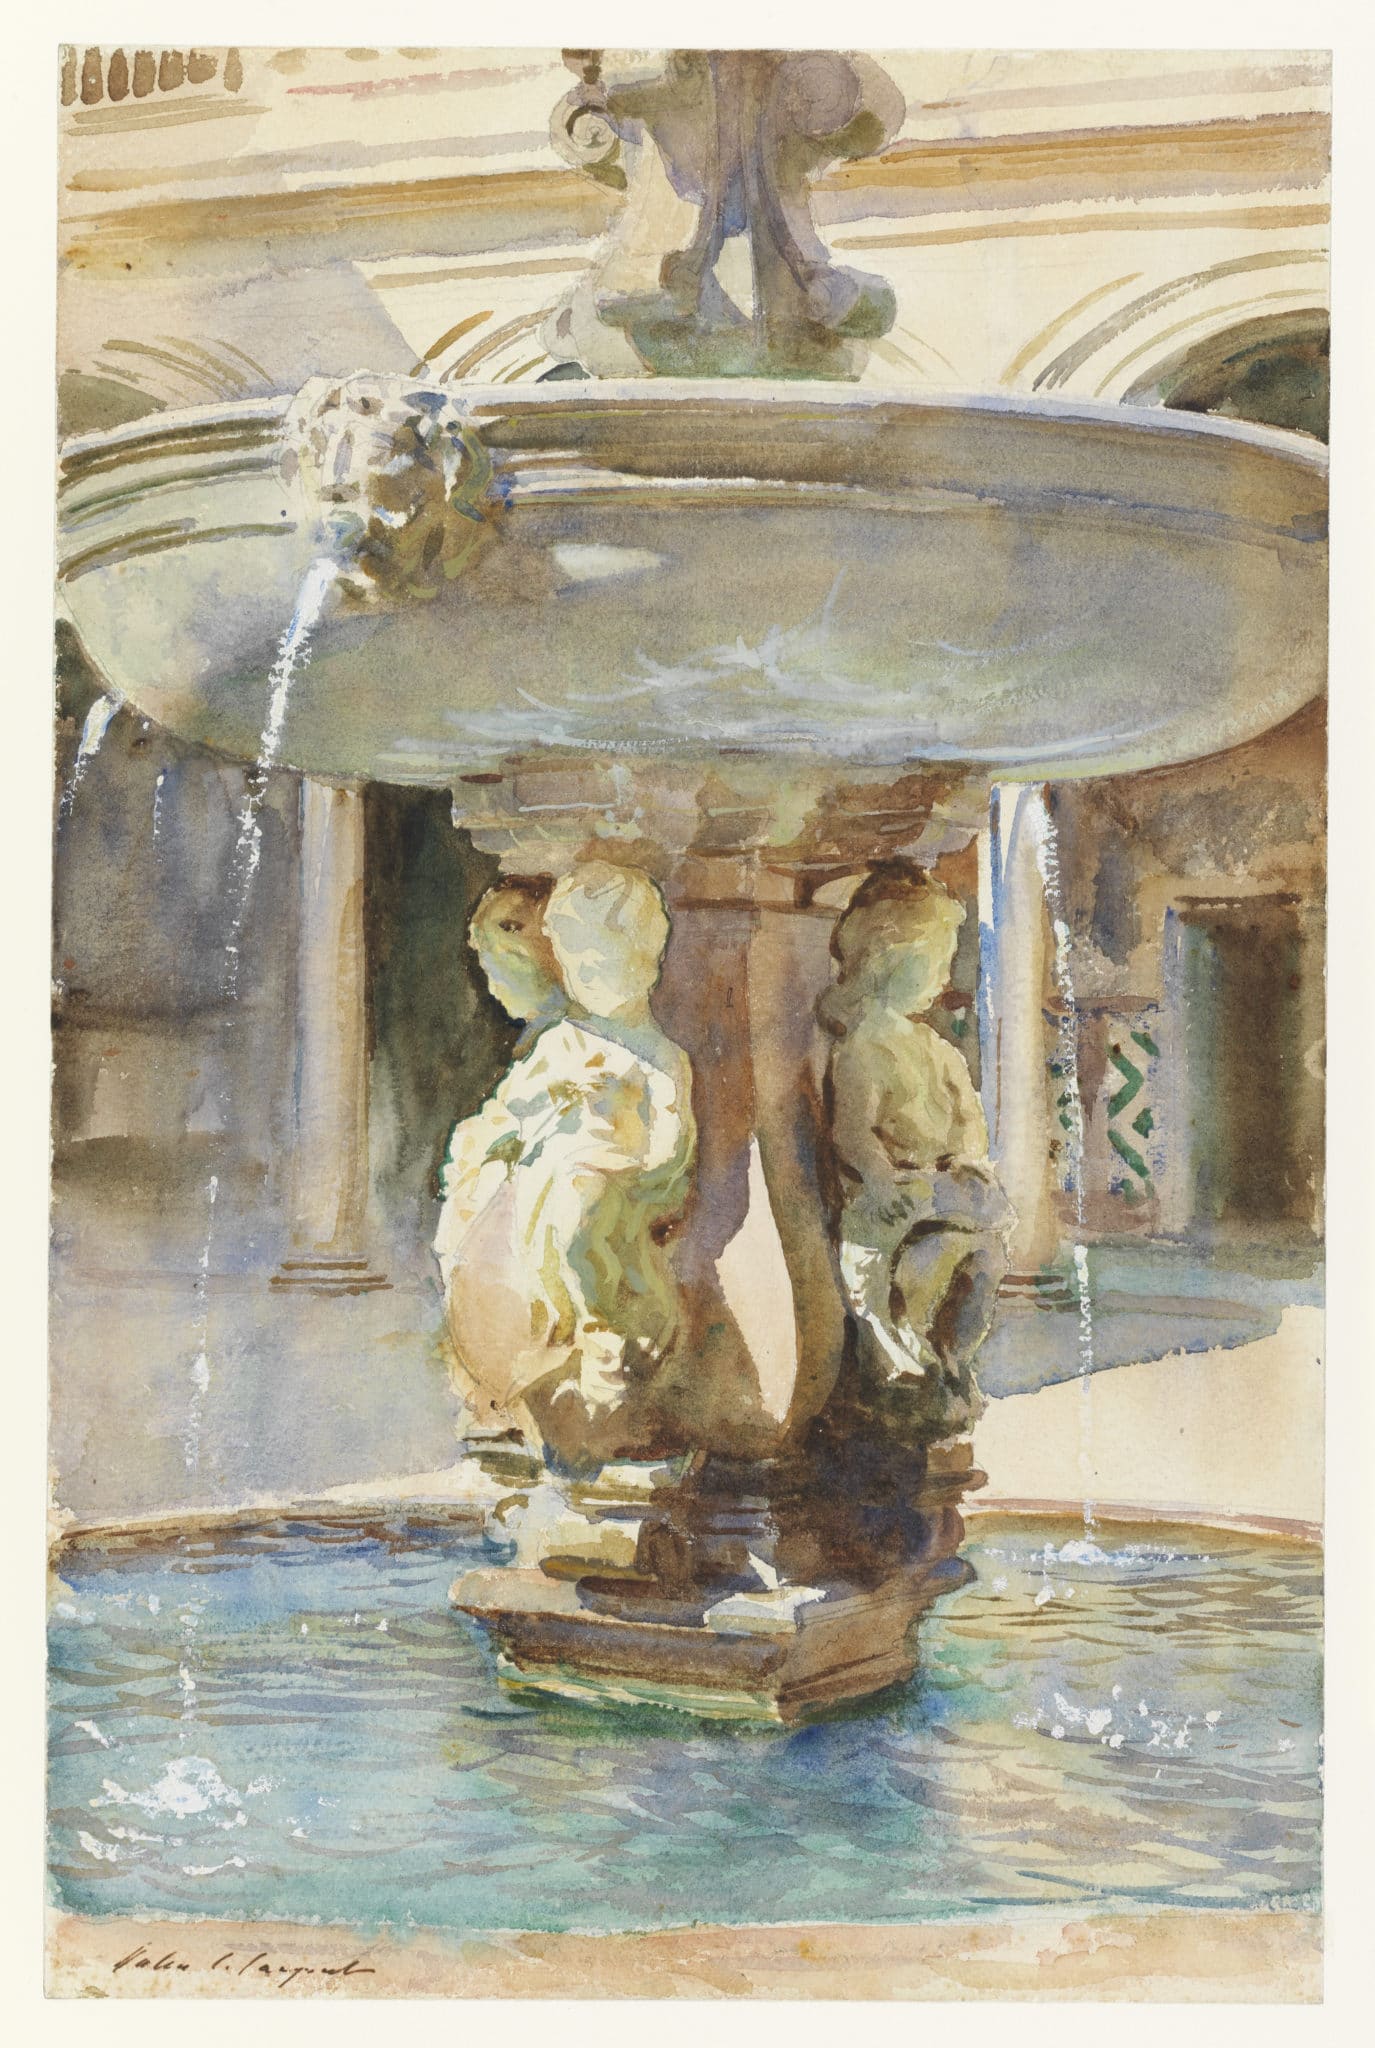 John Singer Sargent, "Spanish Fountain," 1912, graphite, watercolour, and gouache on paper, 53.34 x 34.61 cm ( 21 x 13 5/8 in), Fitzwilliam Museum, University of Cambridge, England